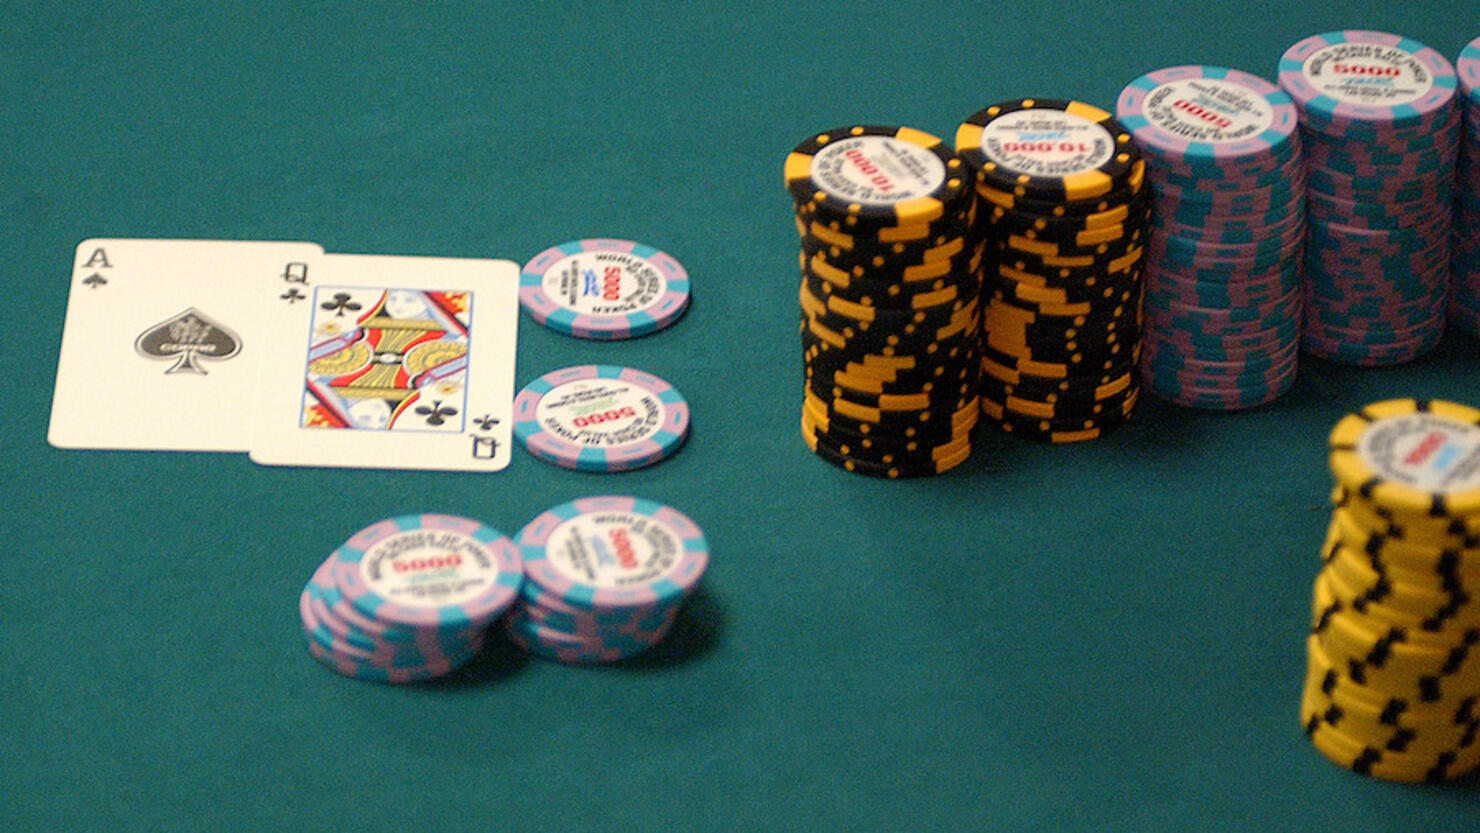 2005 World Series of Poker - July 13, 2005
